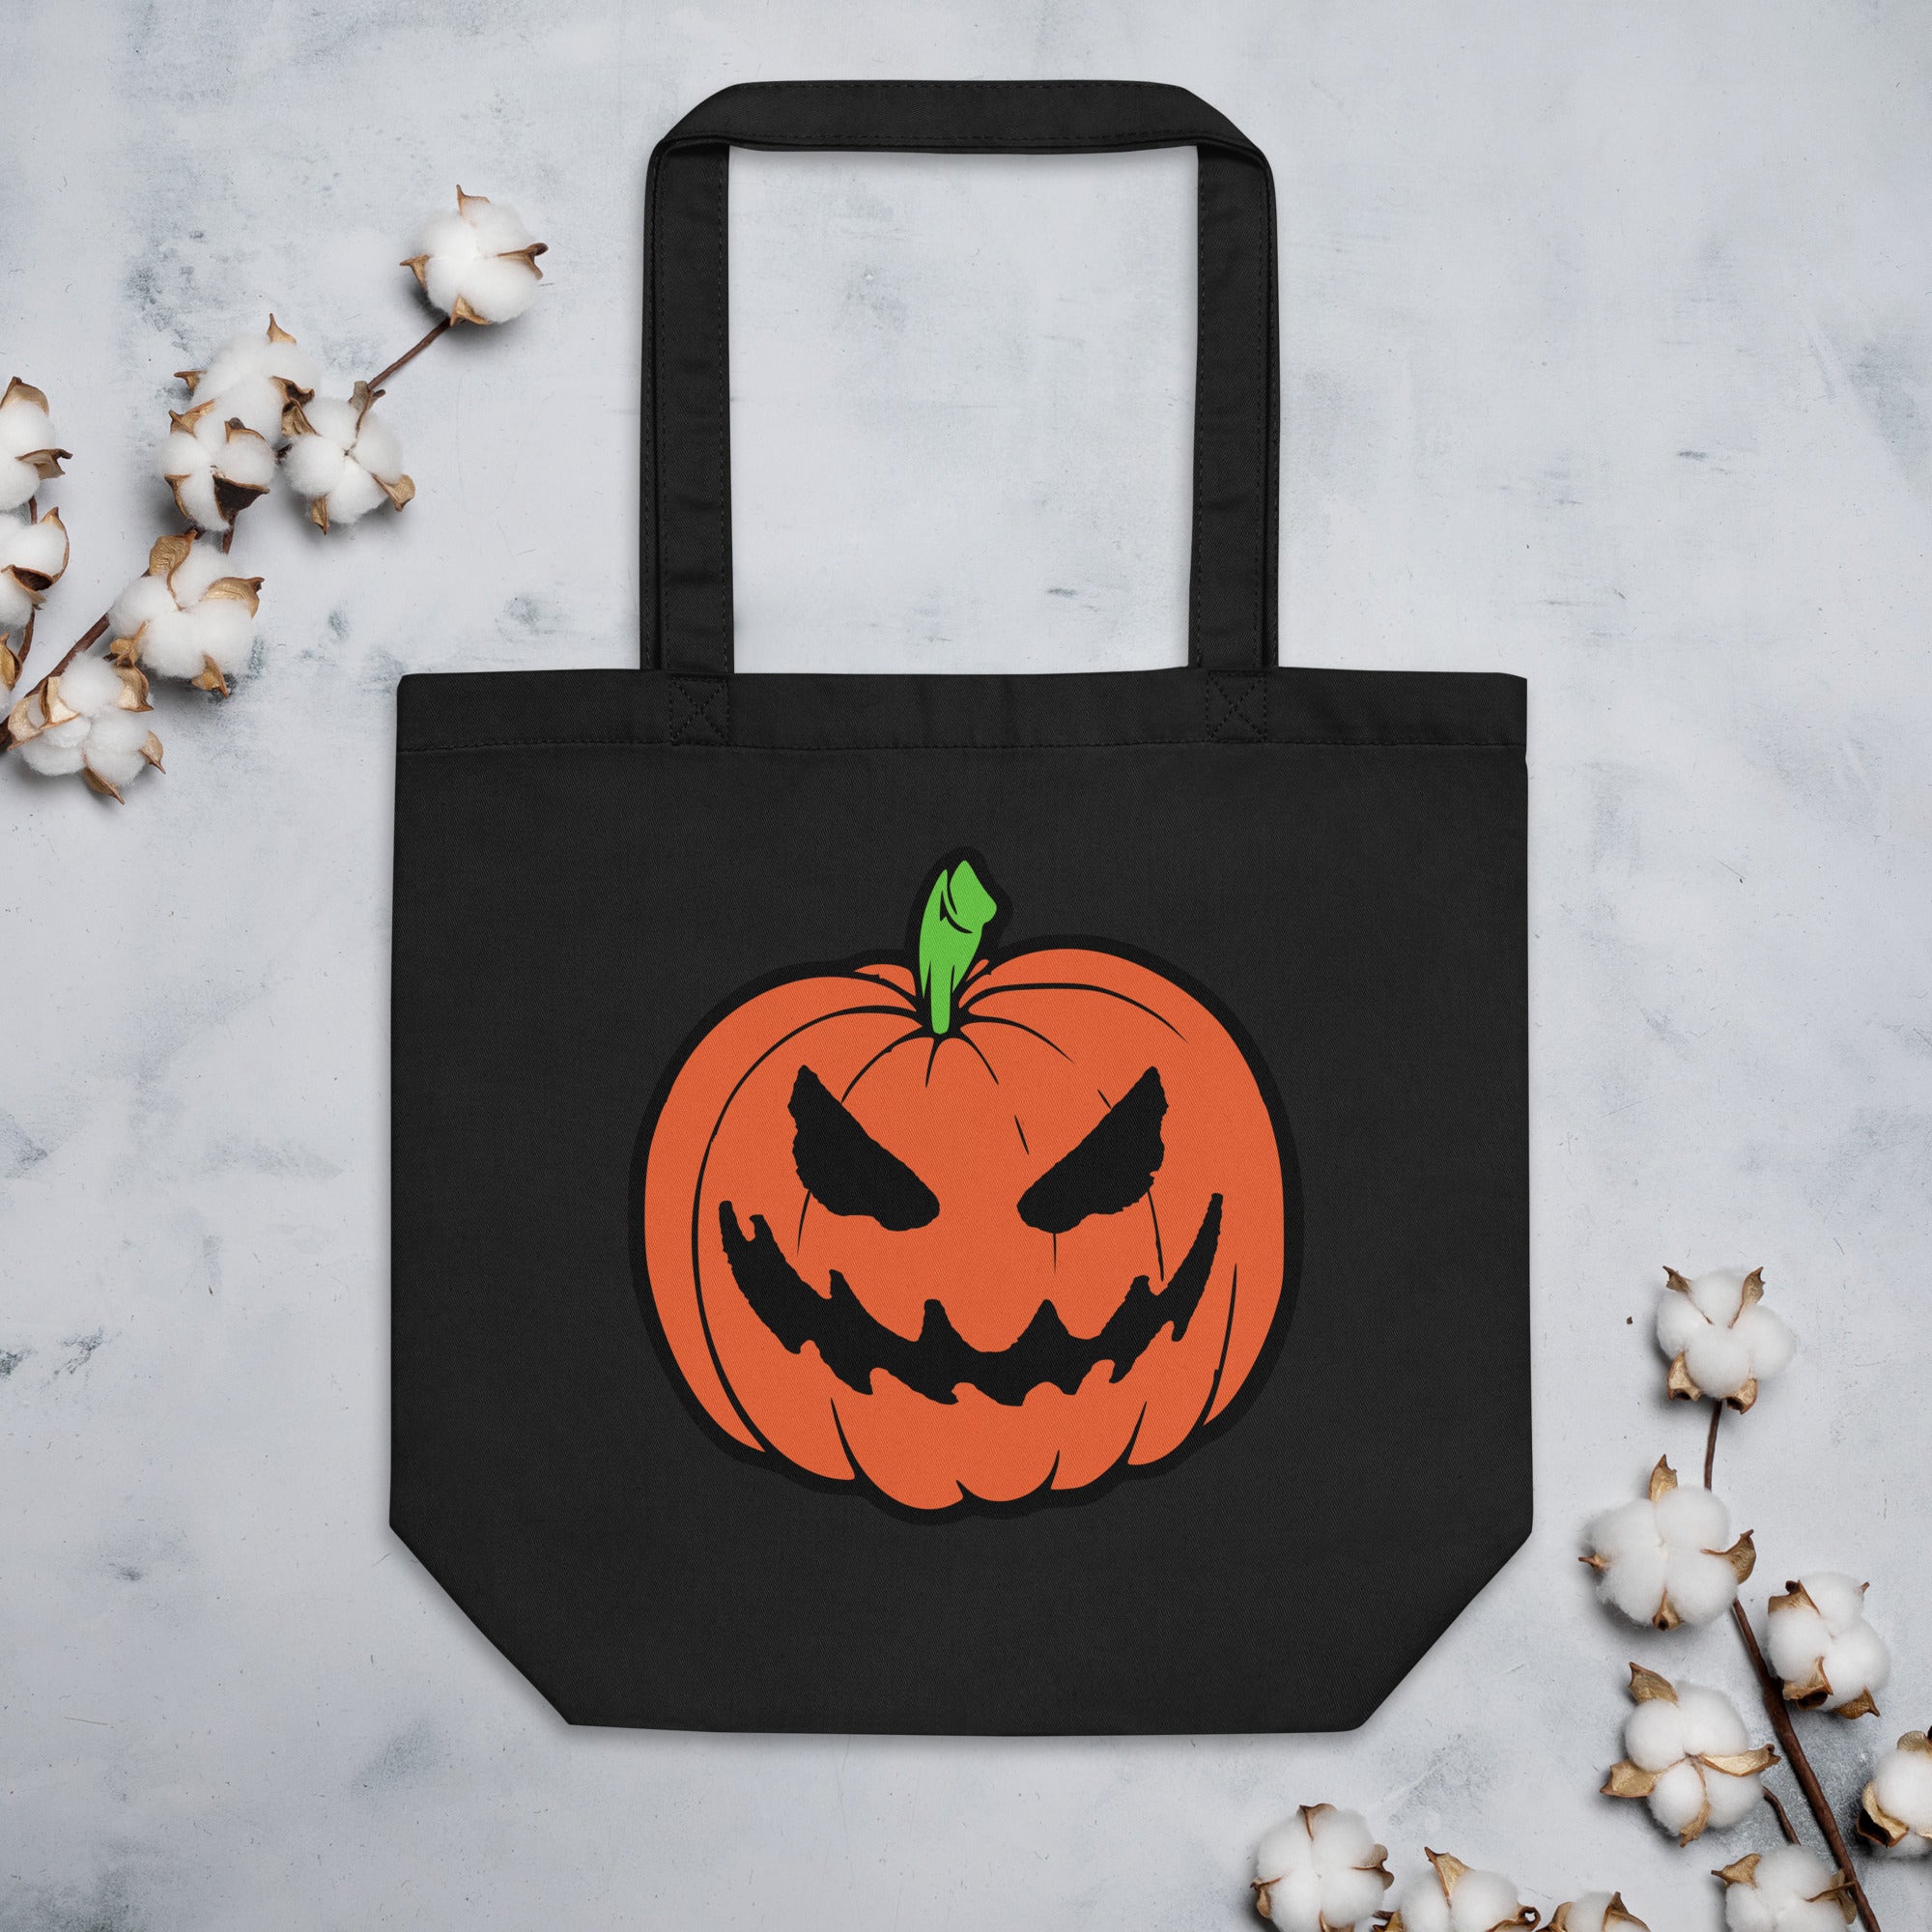 Scary Jack O Lantern Halloween Pumpkin Eco Tote Bag - Edge of Life Designs